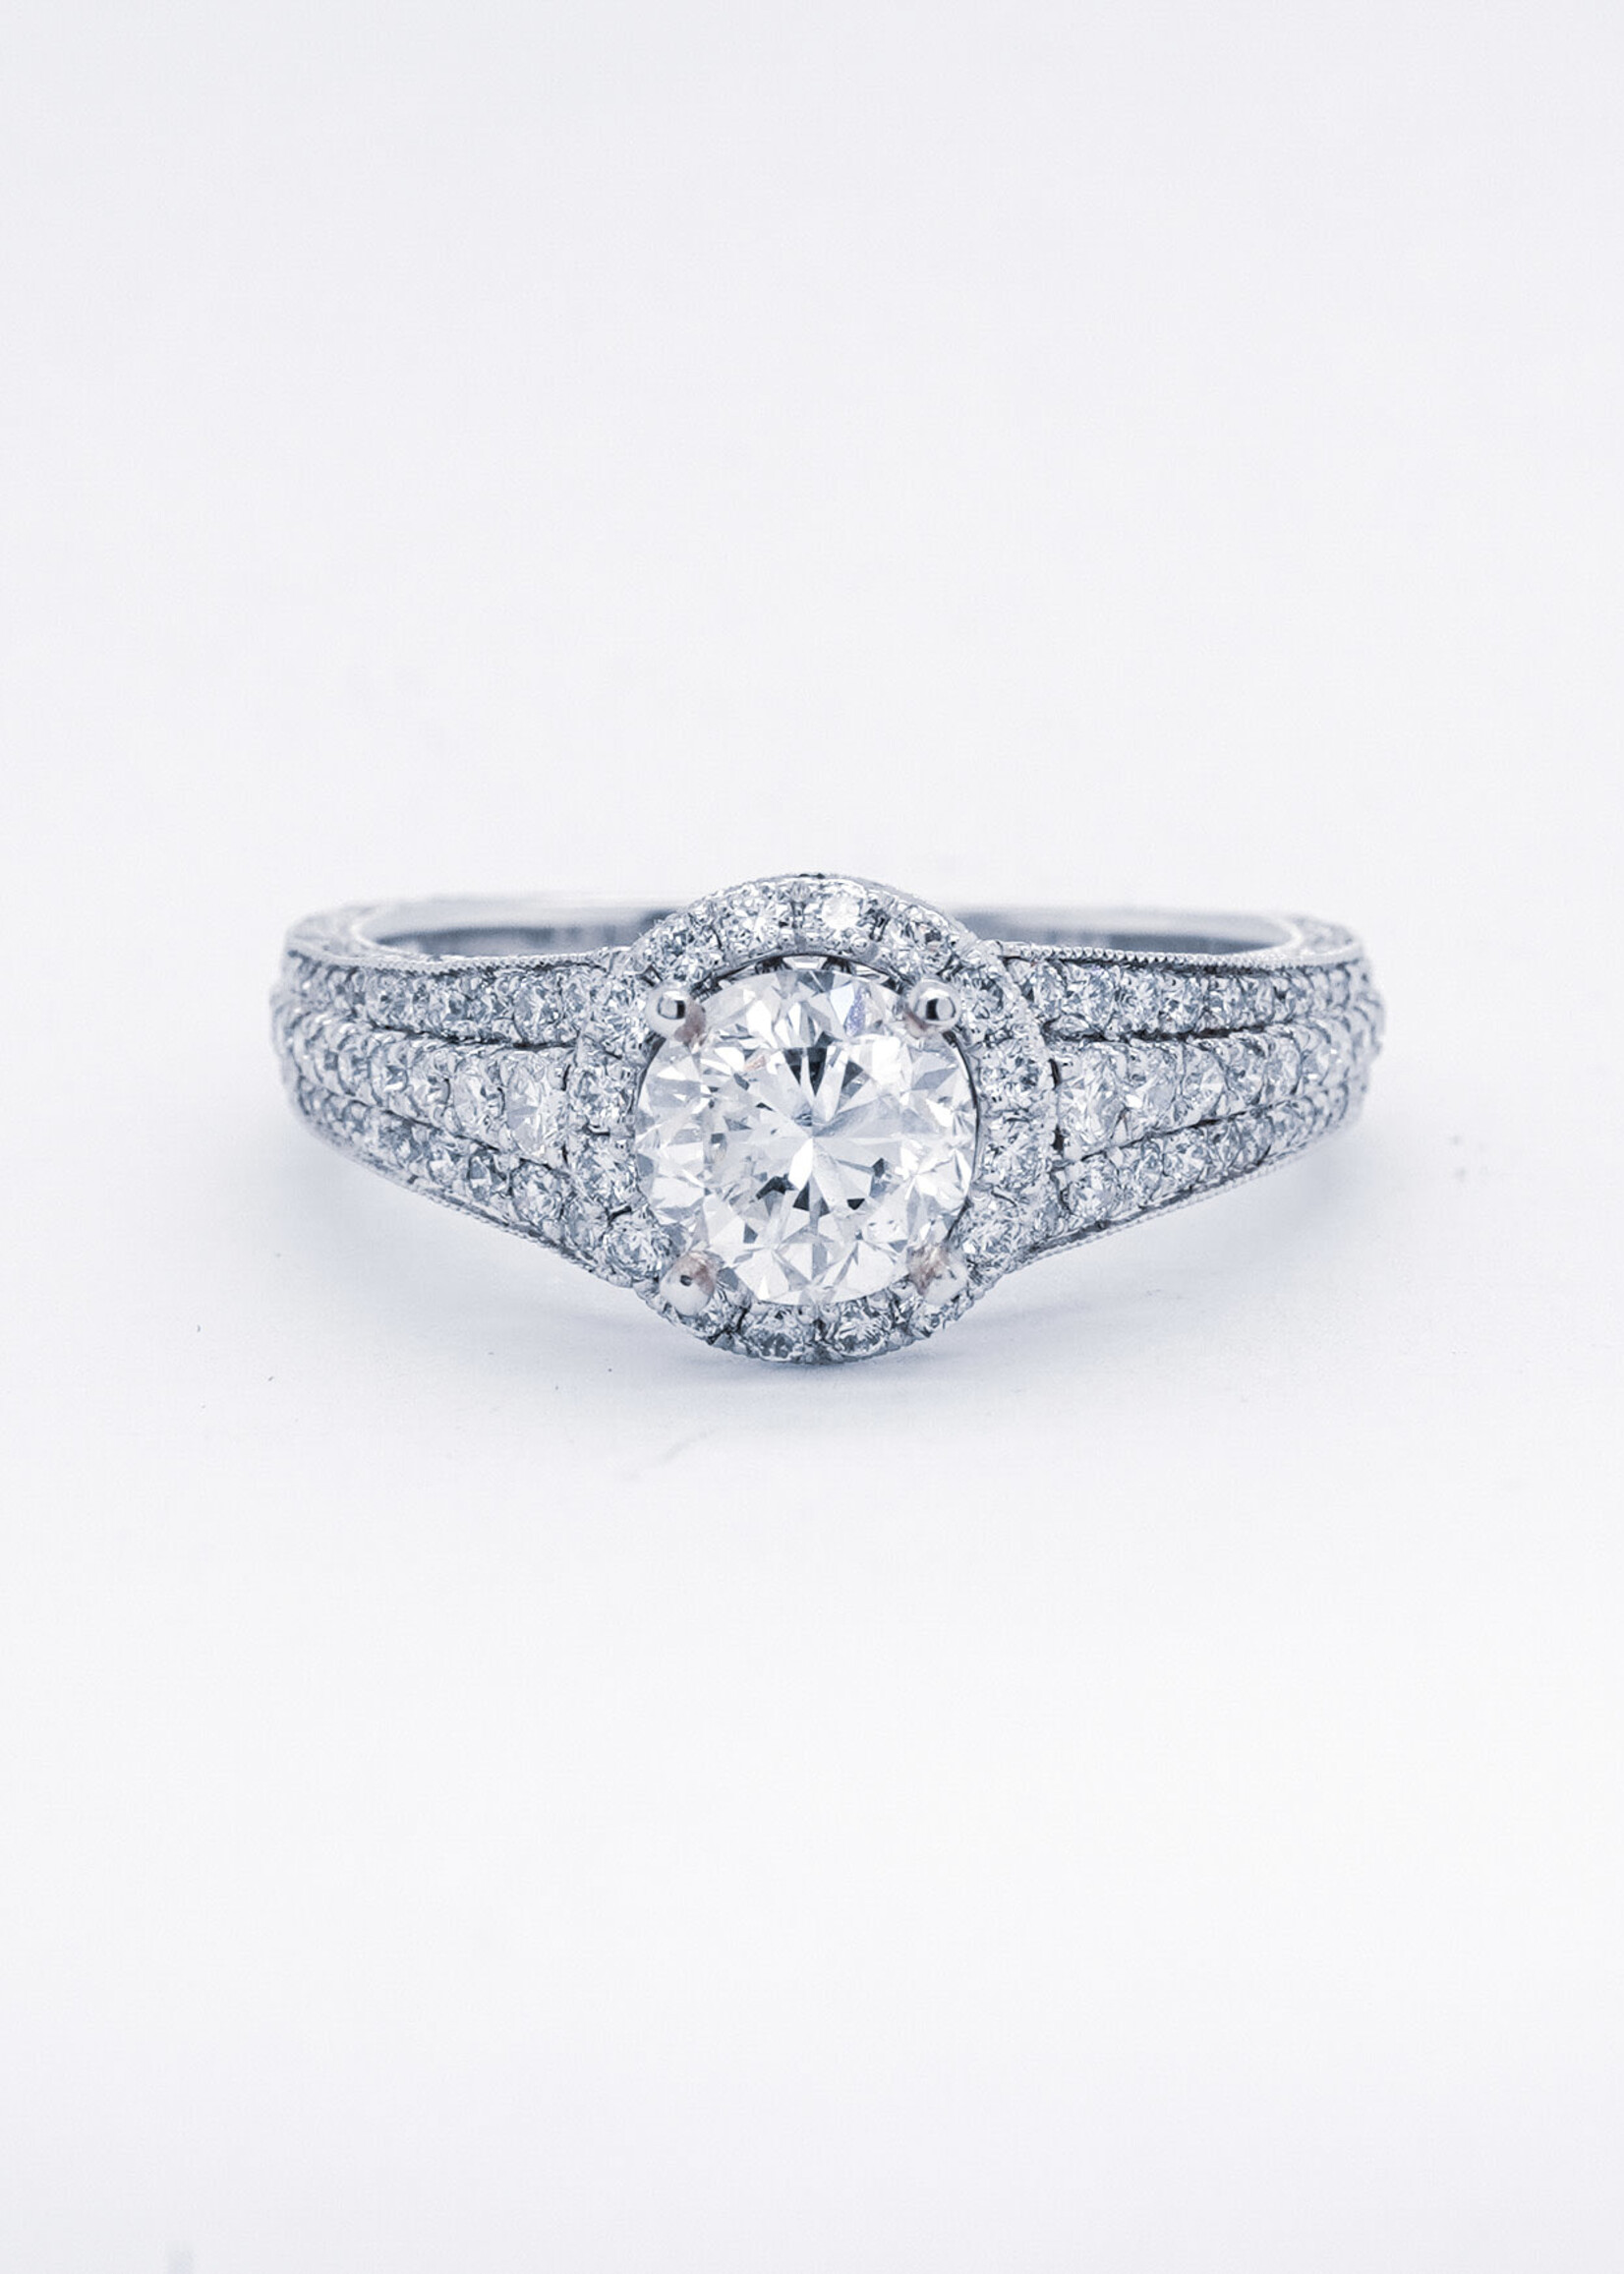 18KW 3.57g 1.75ctw (1.01ct) G/SI1 Round Diamond Halo Engagement Ring (size 6.5)